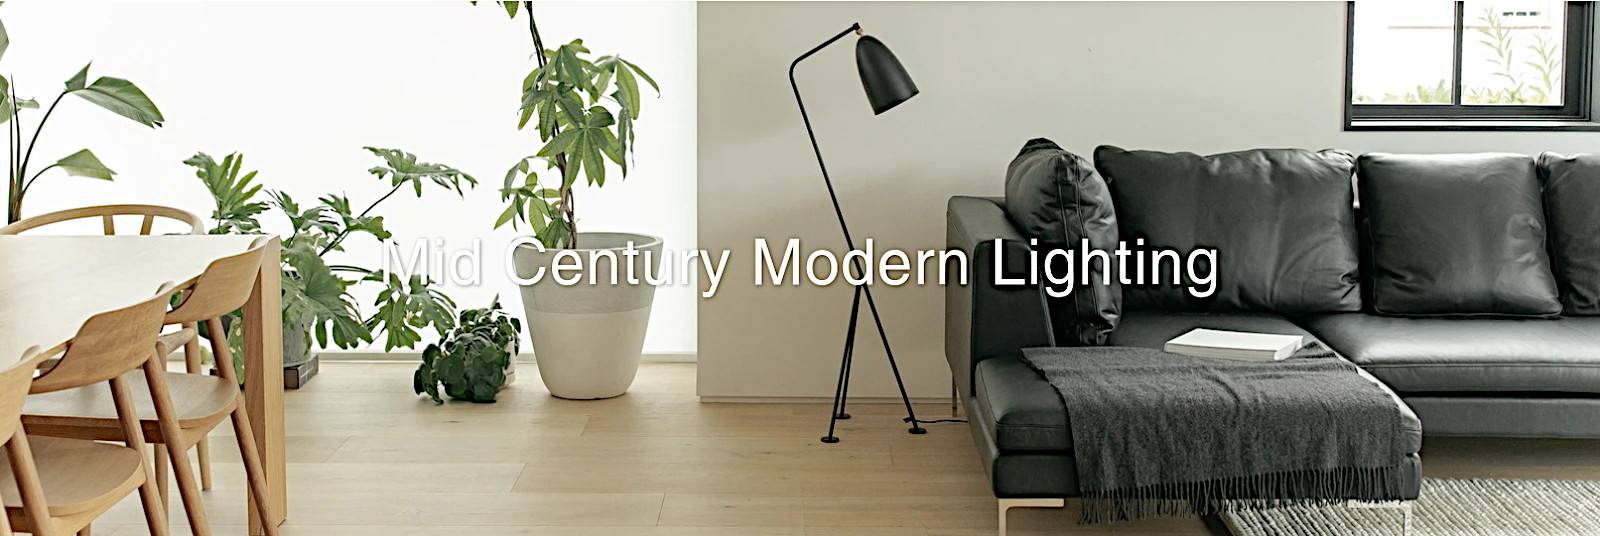 mid century modern lighting popularly priced